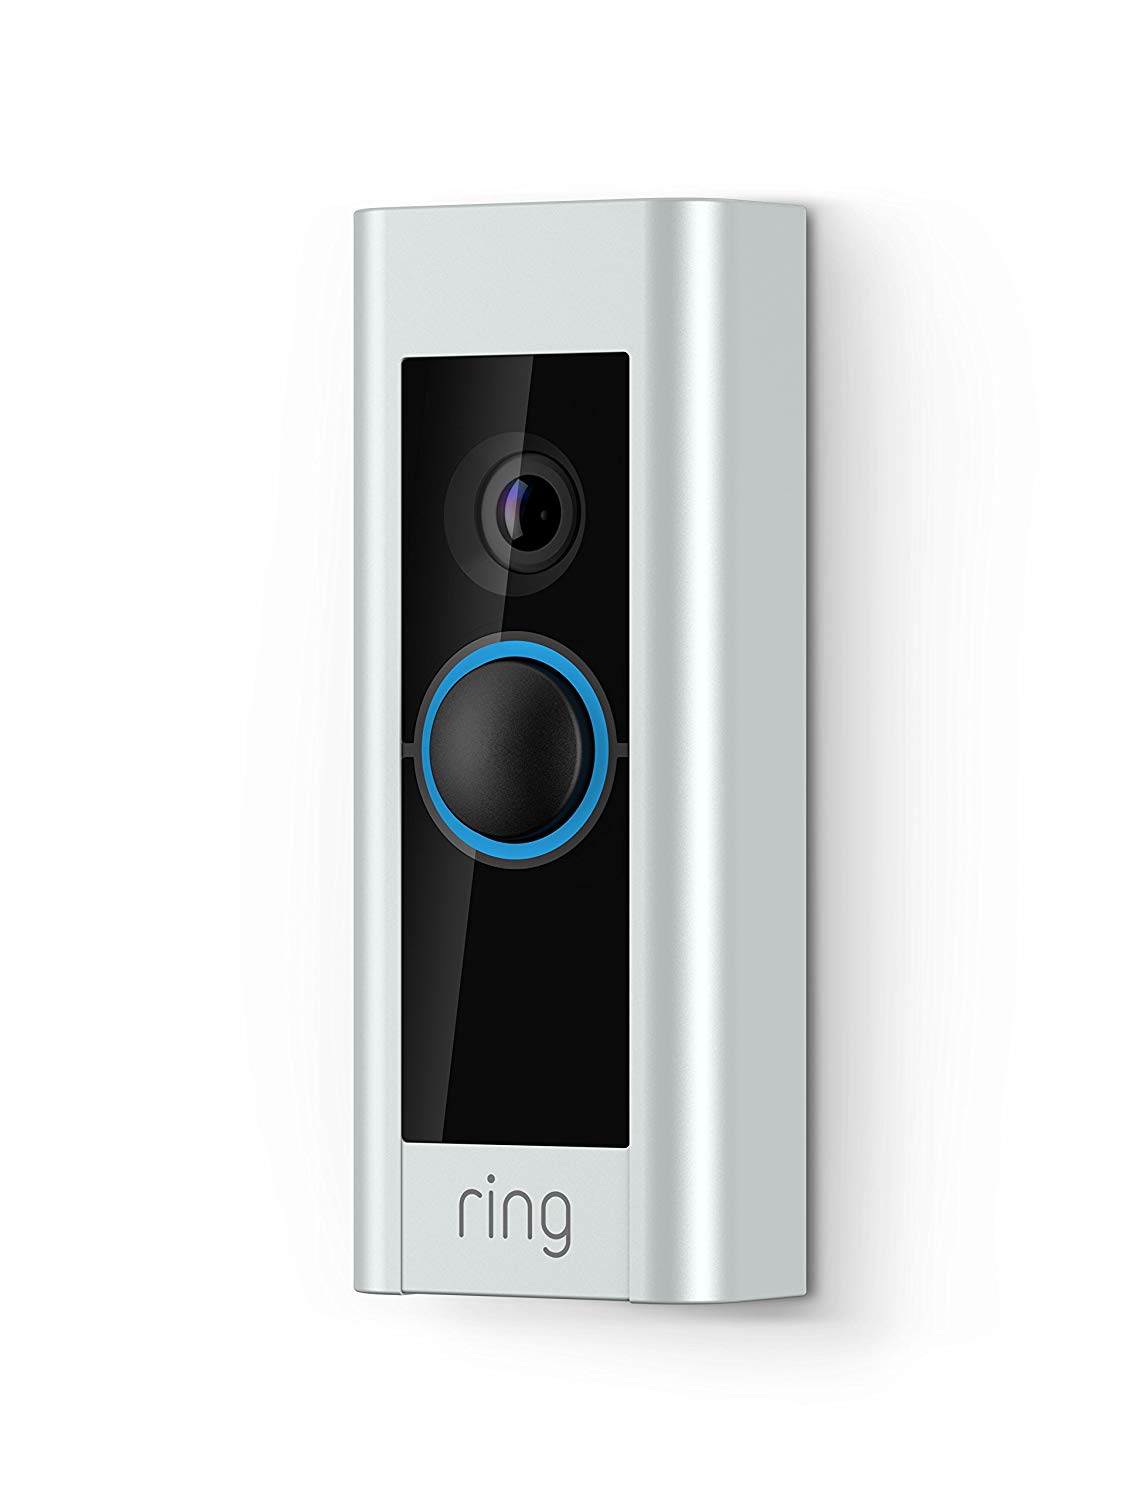 ring doorbell work with google